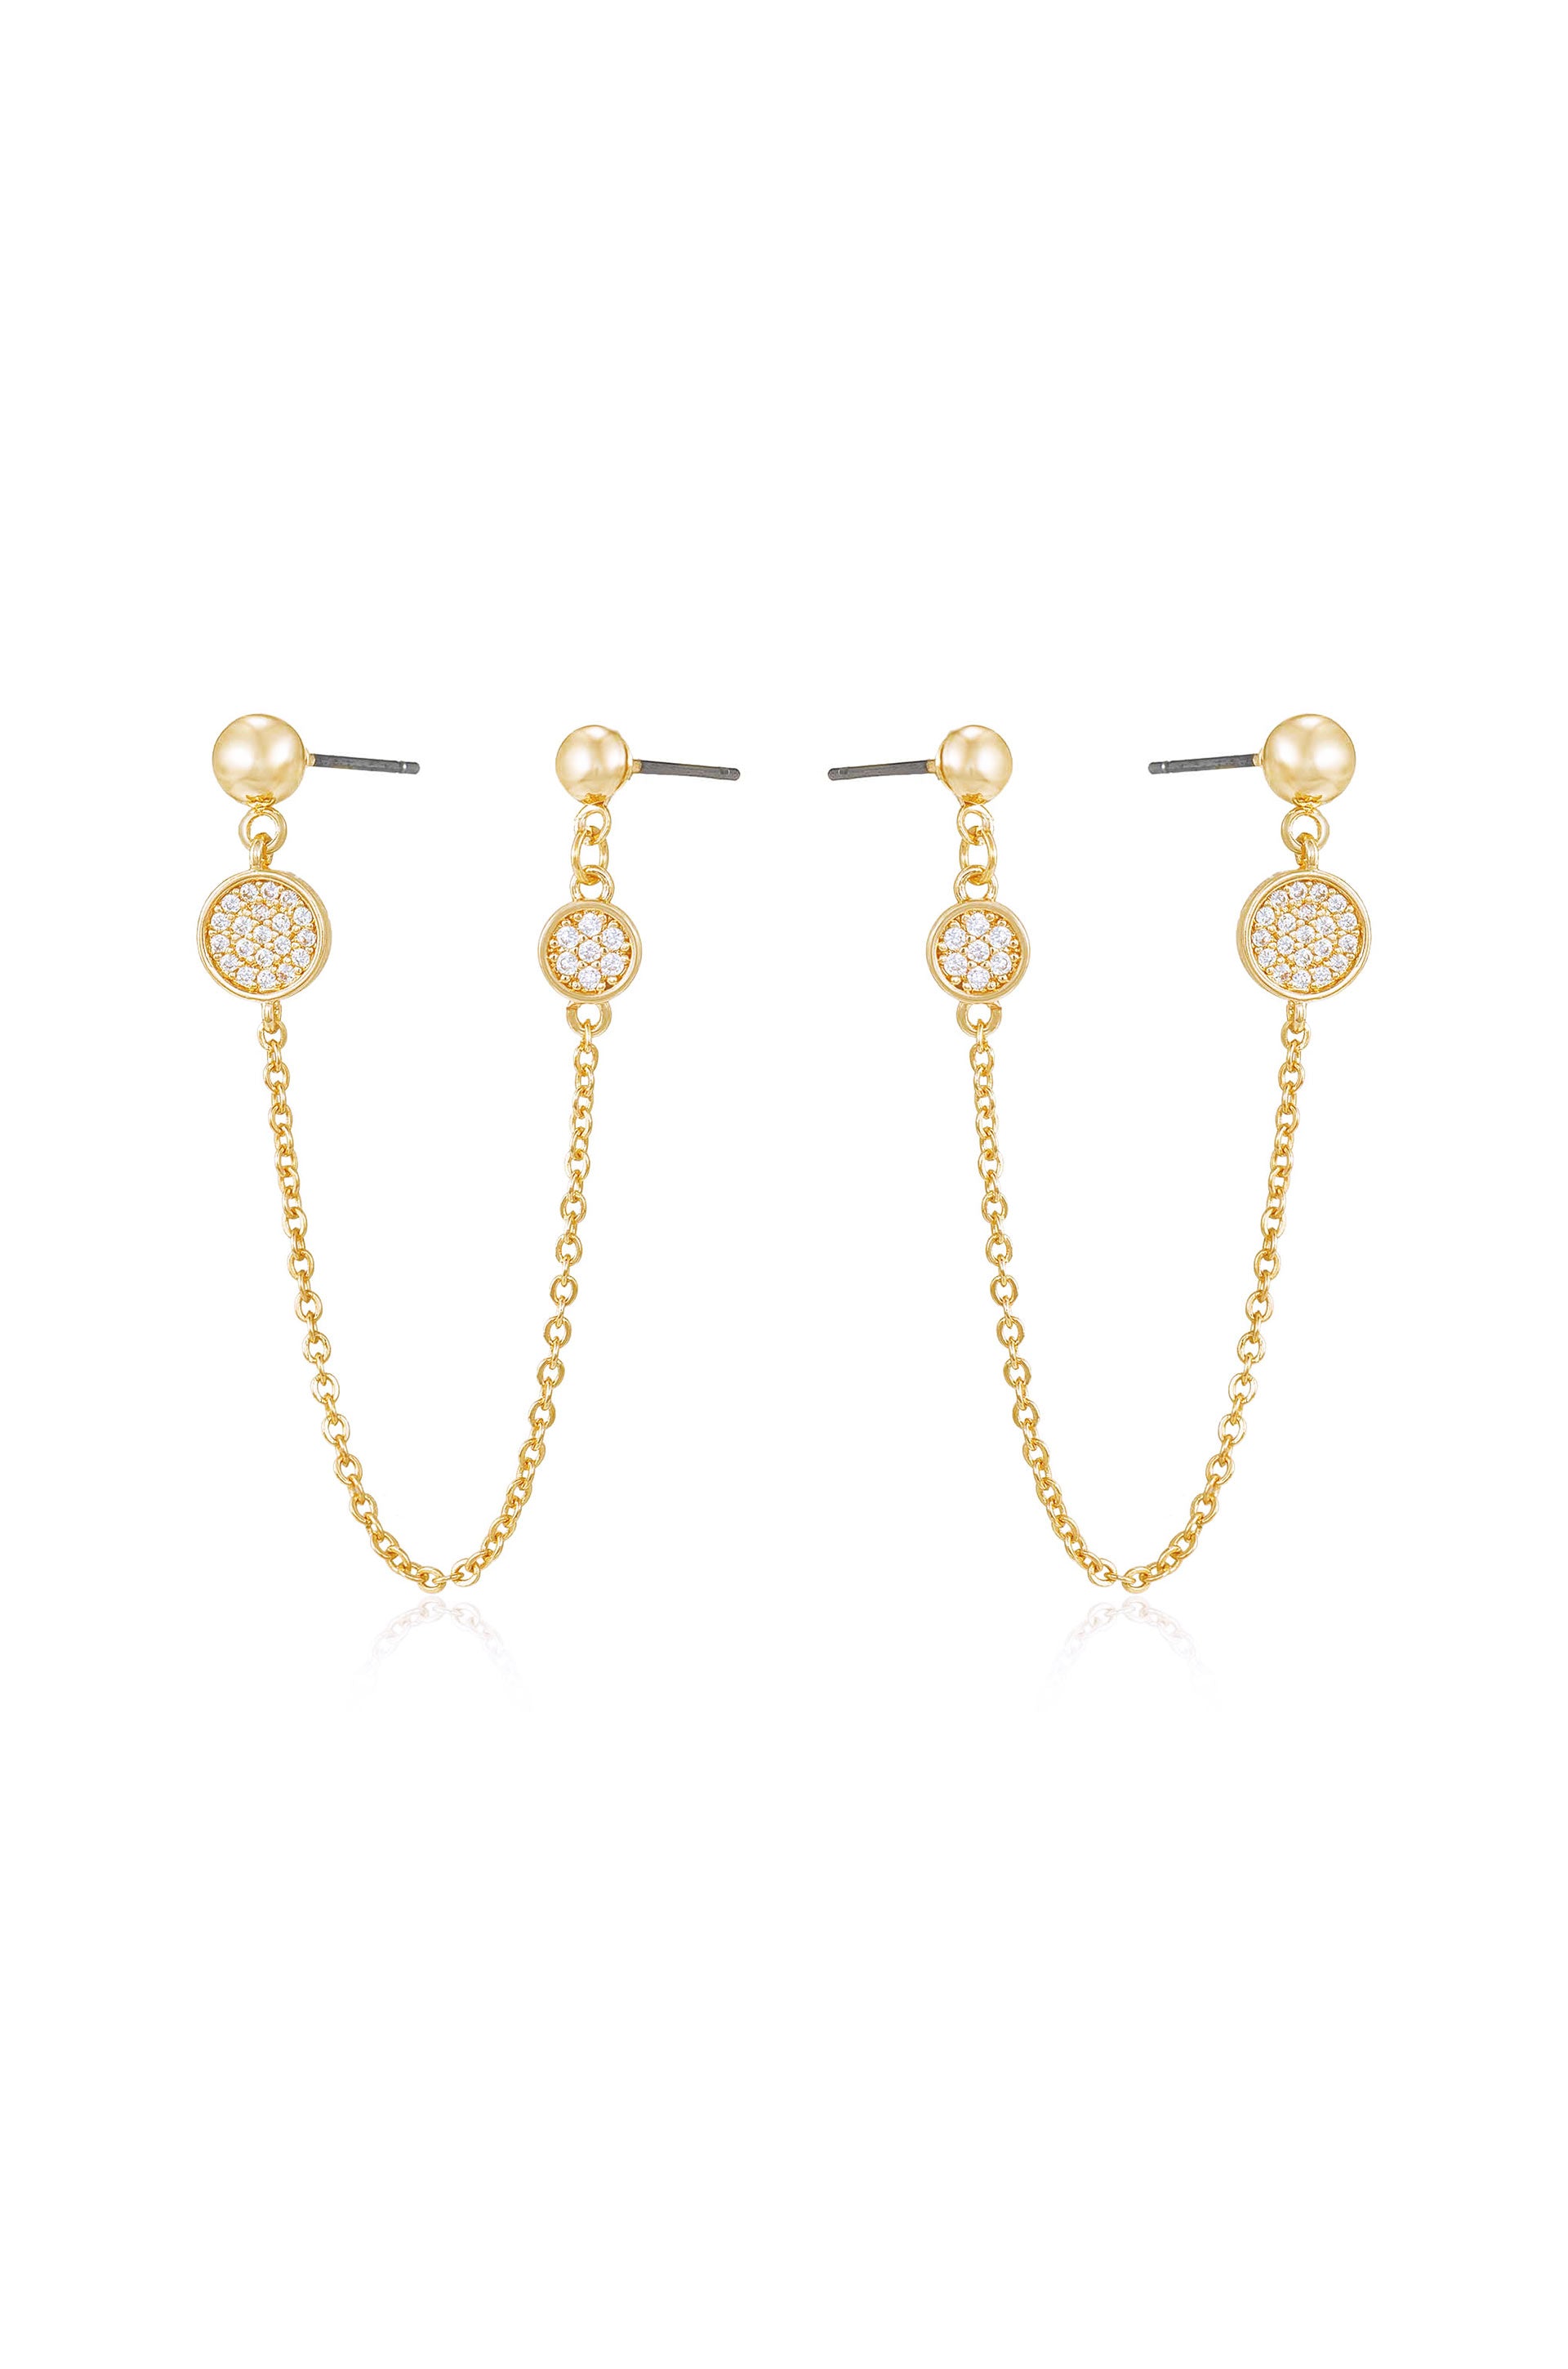 Buy SOHI Gold Plated Long Dangle Earrings Online